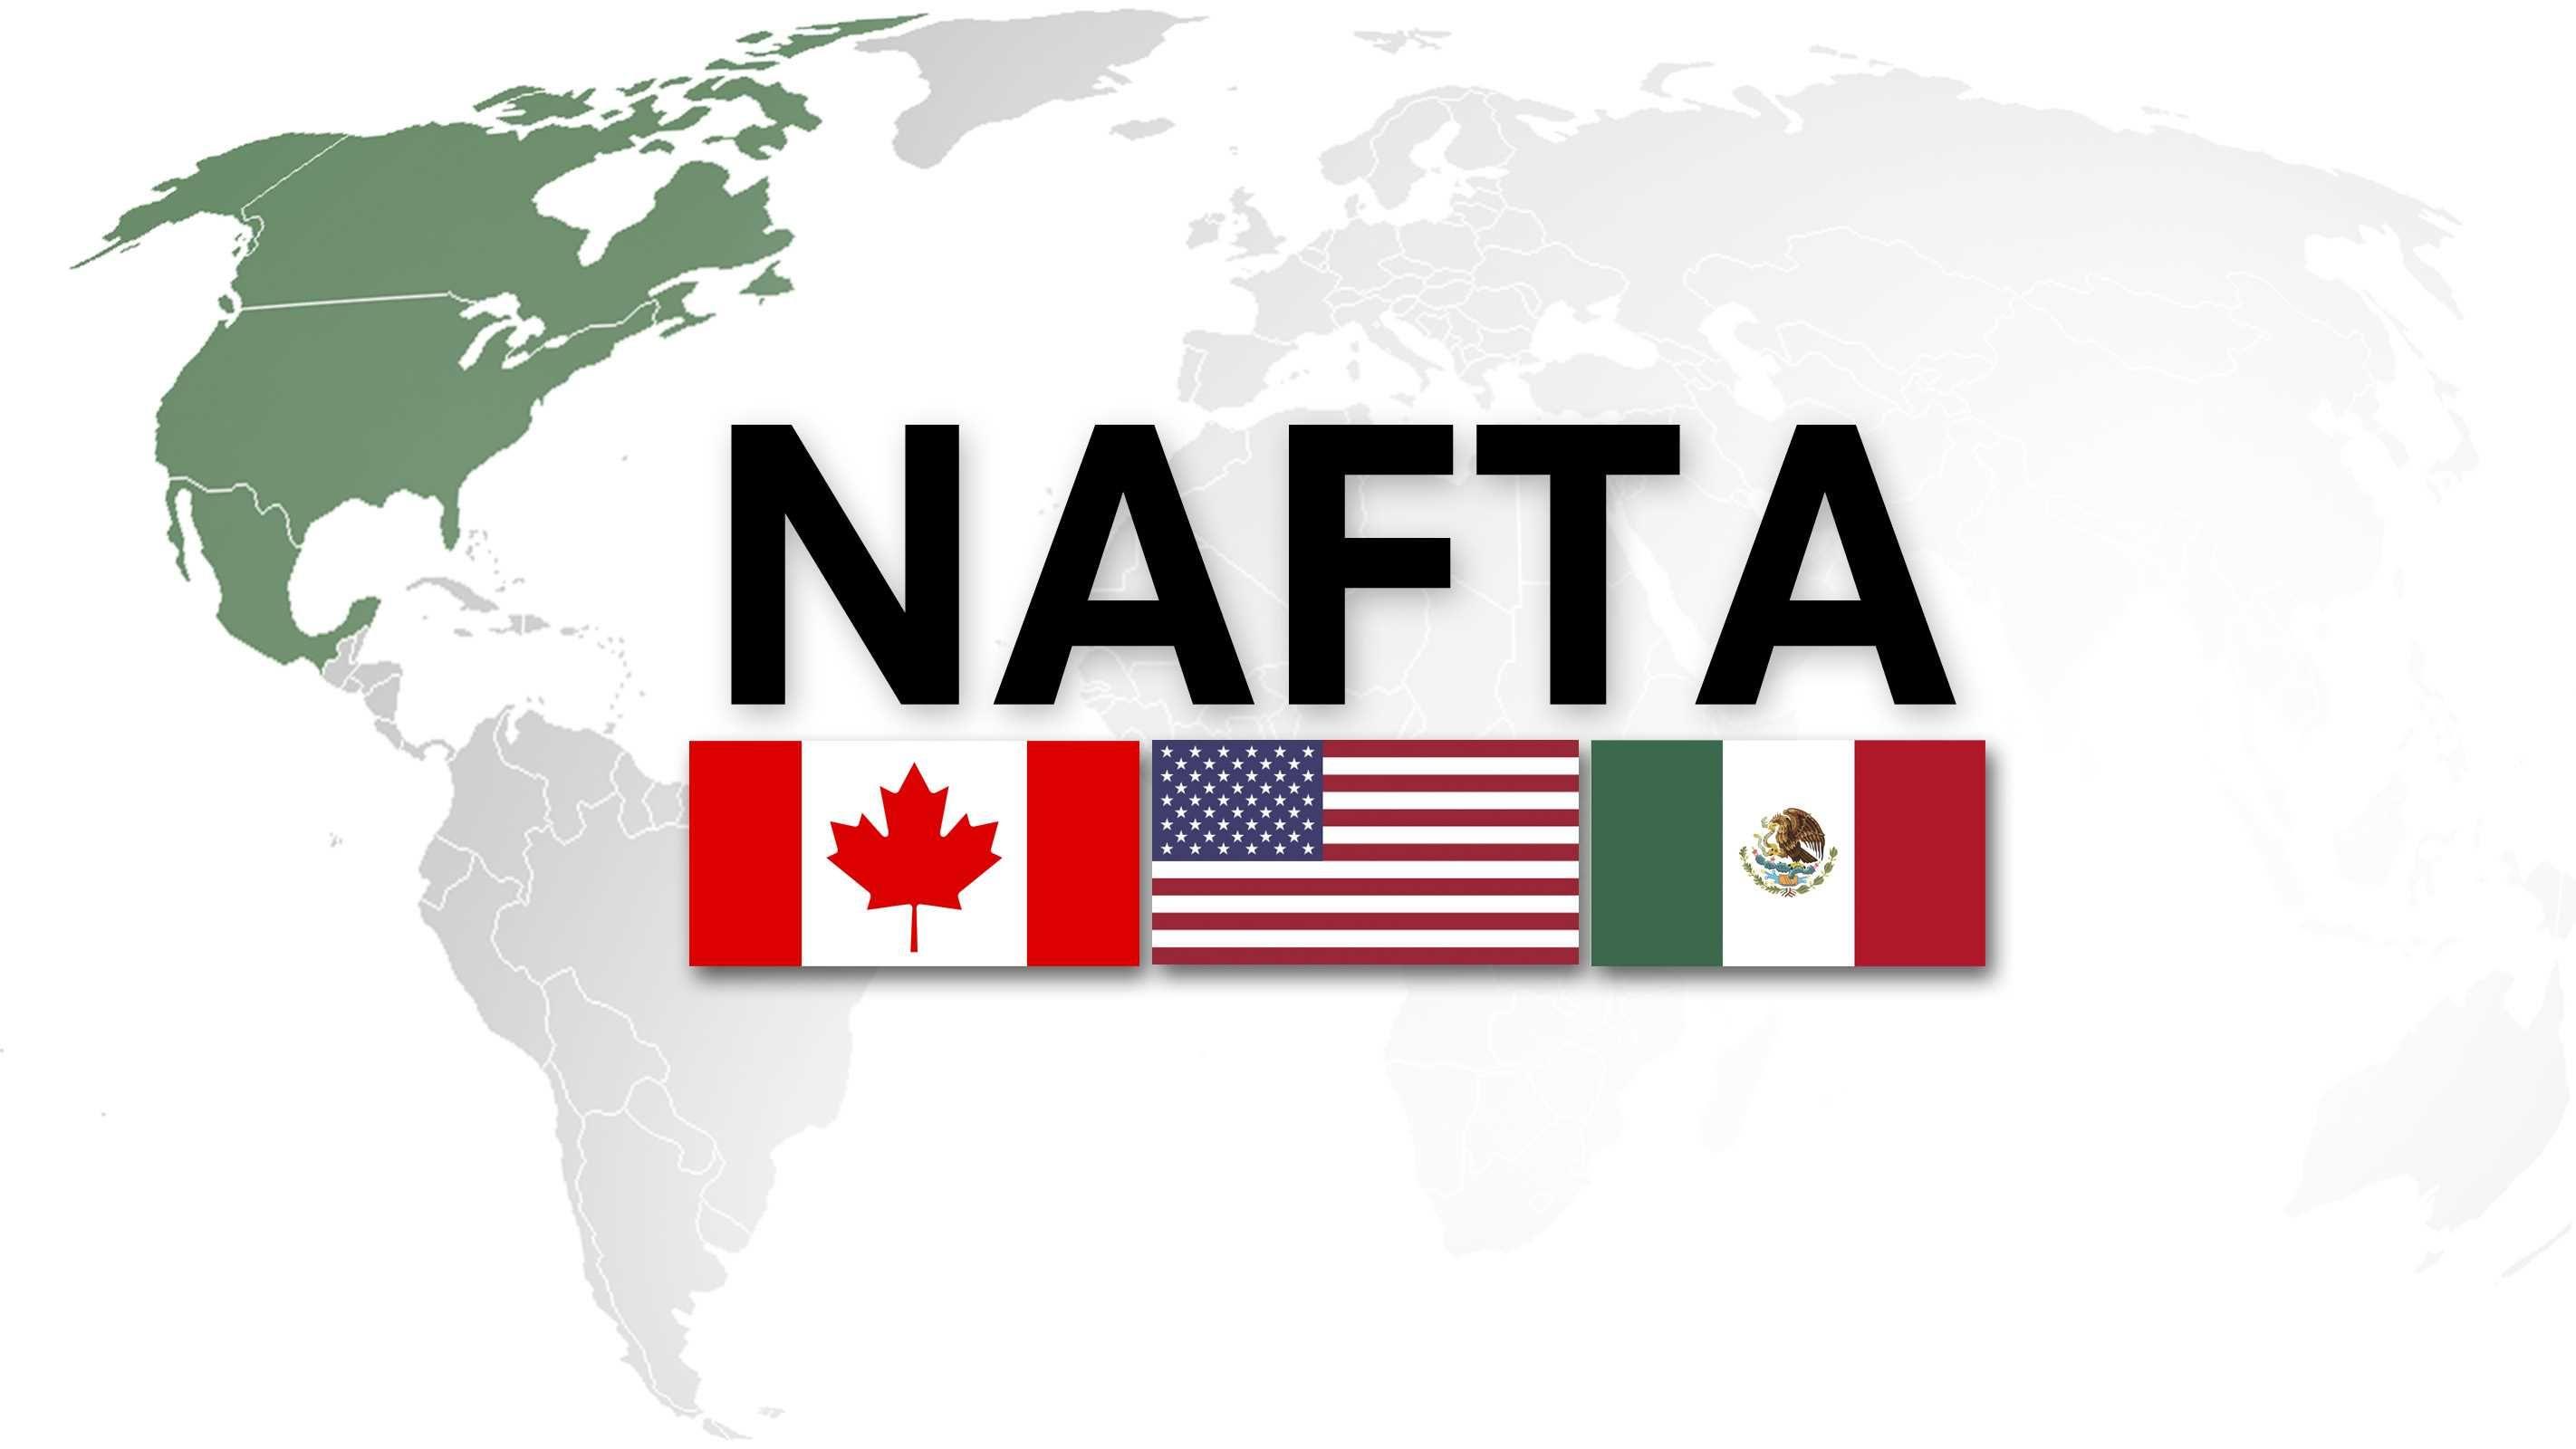 Nafta Logo - U.S., Canada to Revive the Prone To Death NAFTA